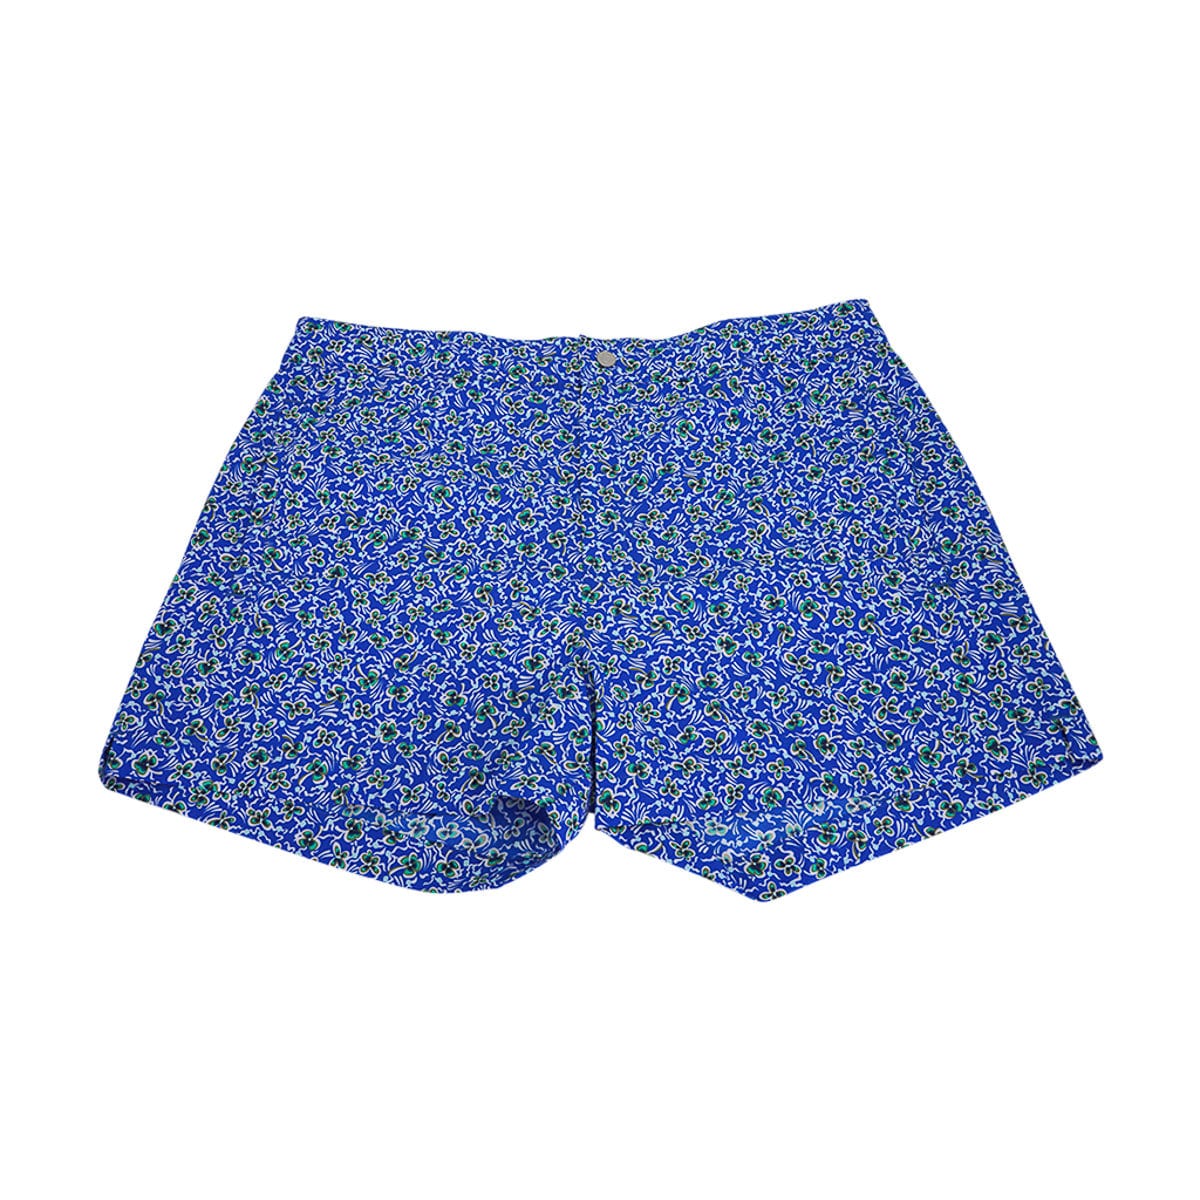 Hermes Men's Swim Shorts Bleu Floral M